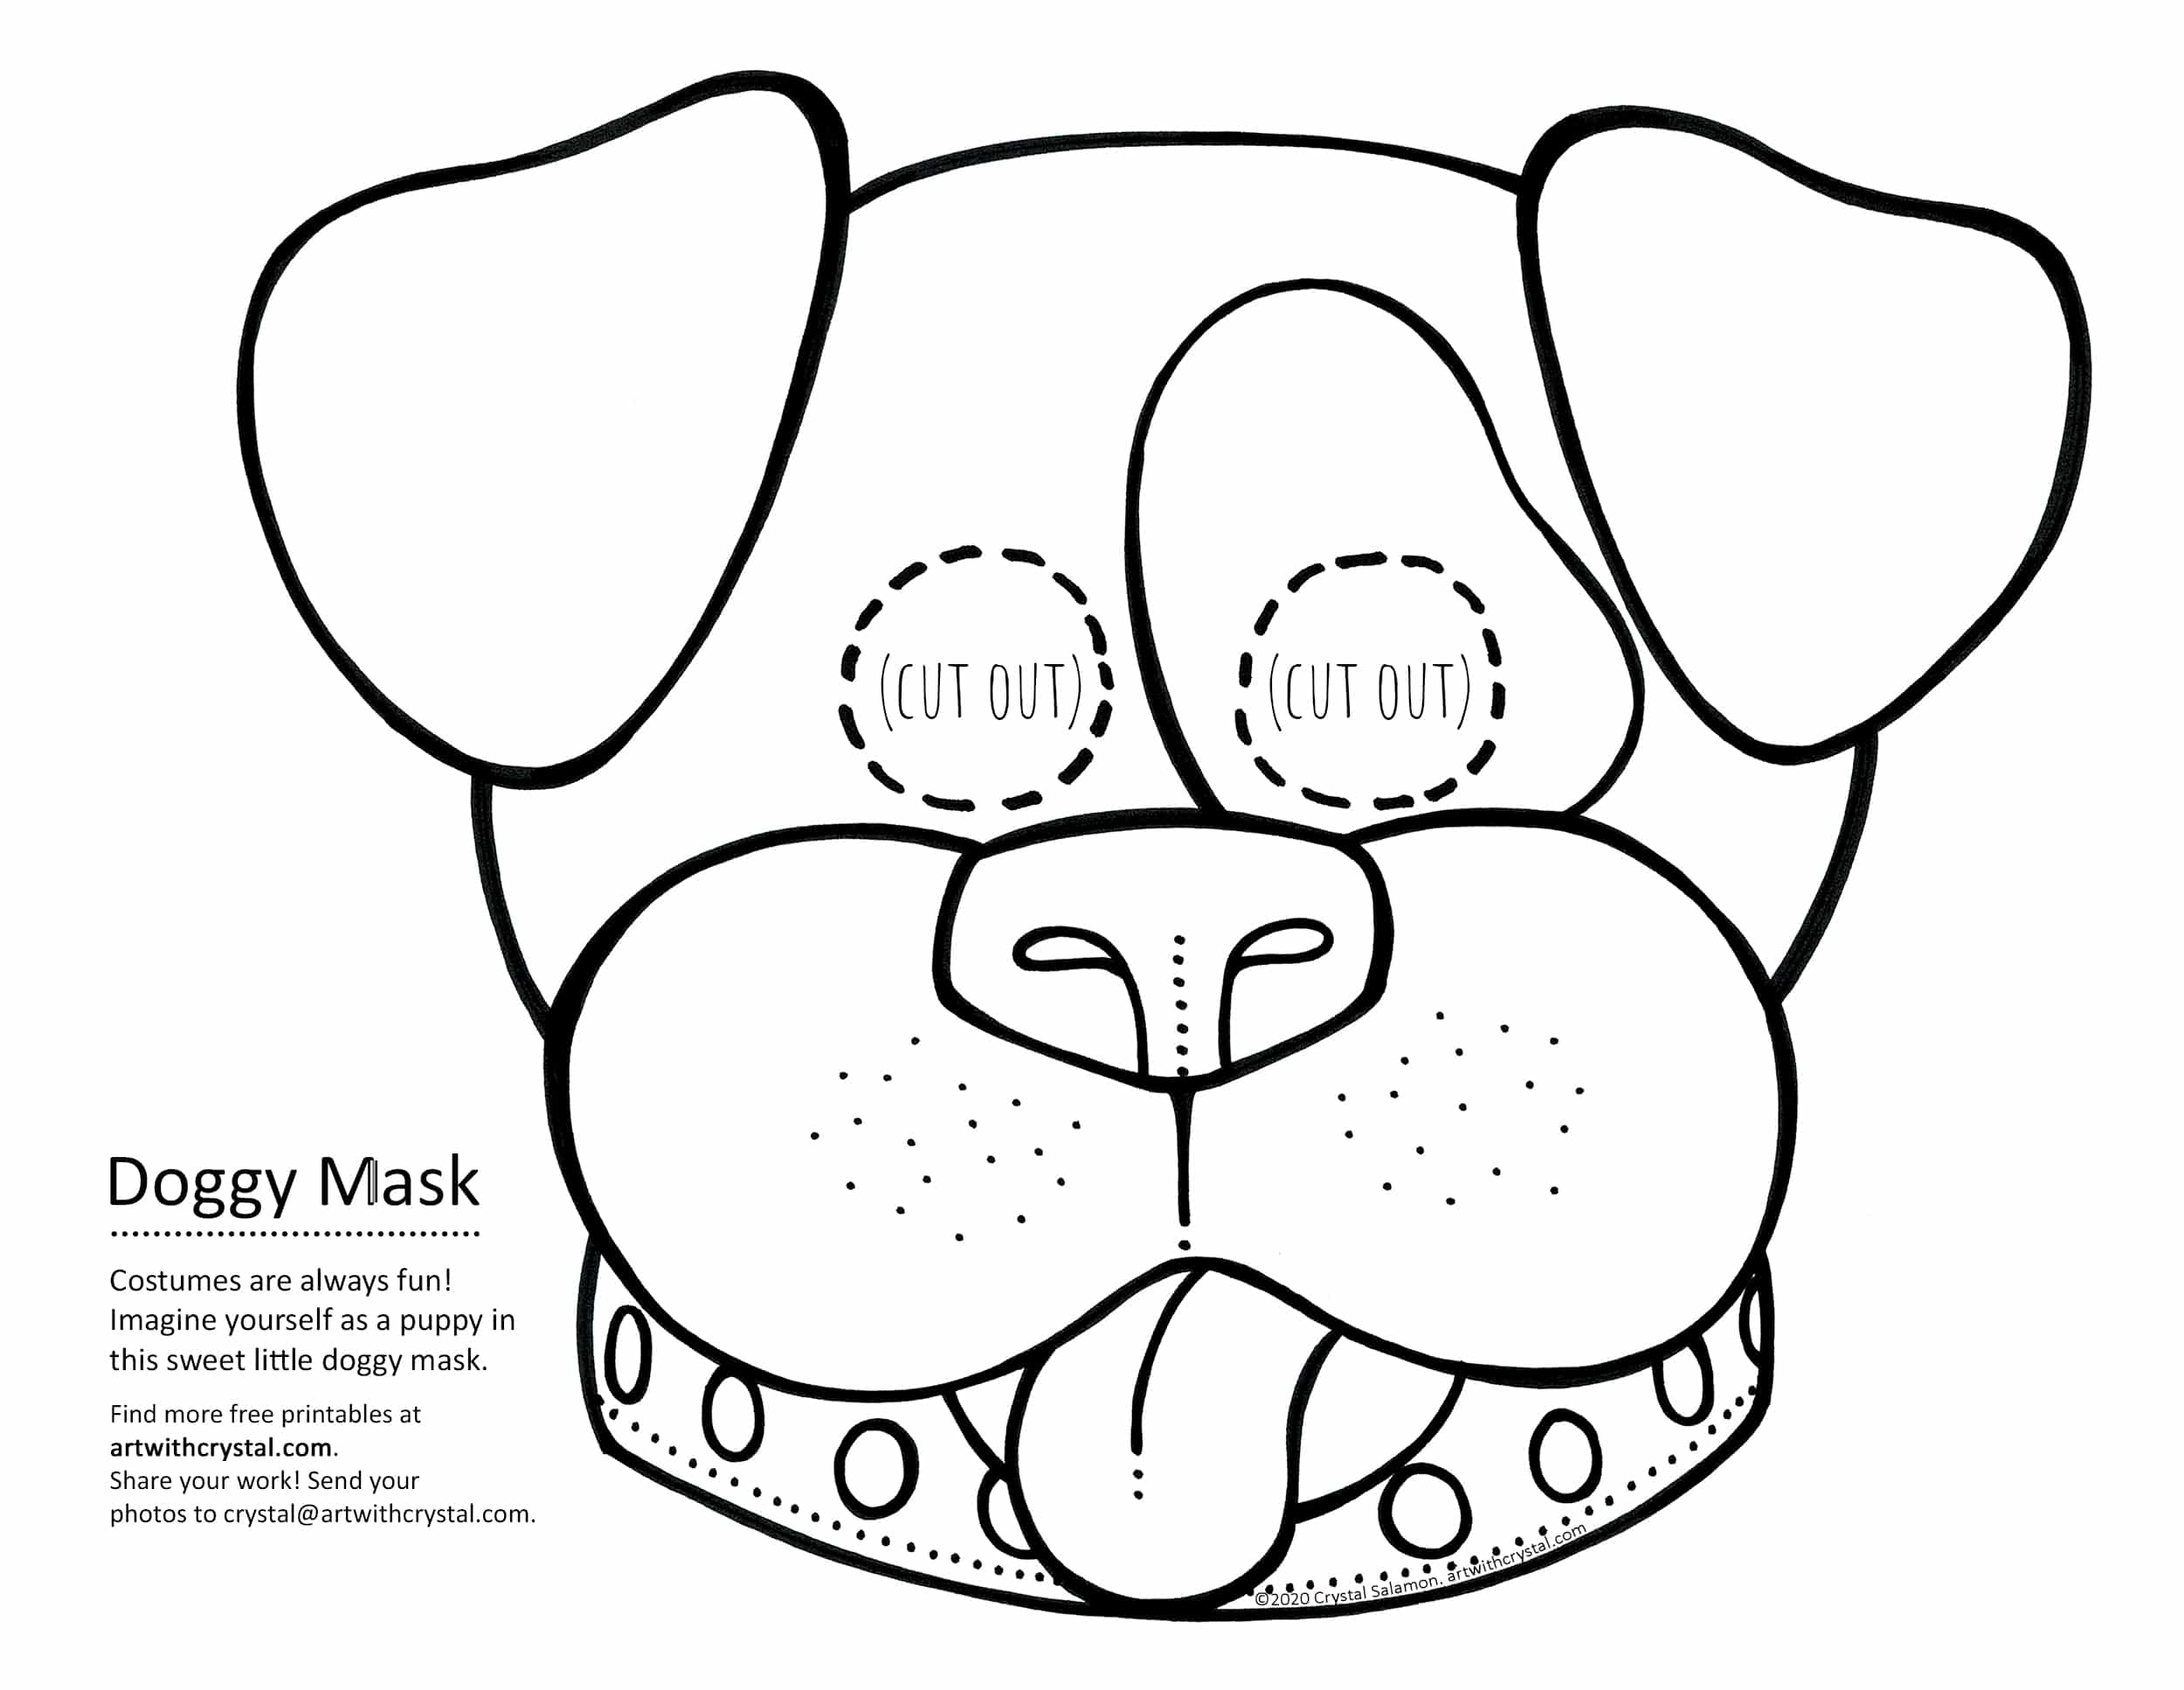 Doggy mask free printable colouring page by crystal salamon